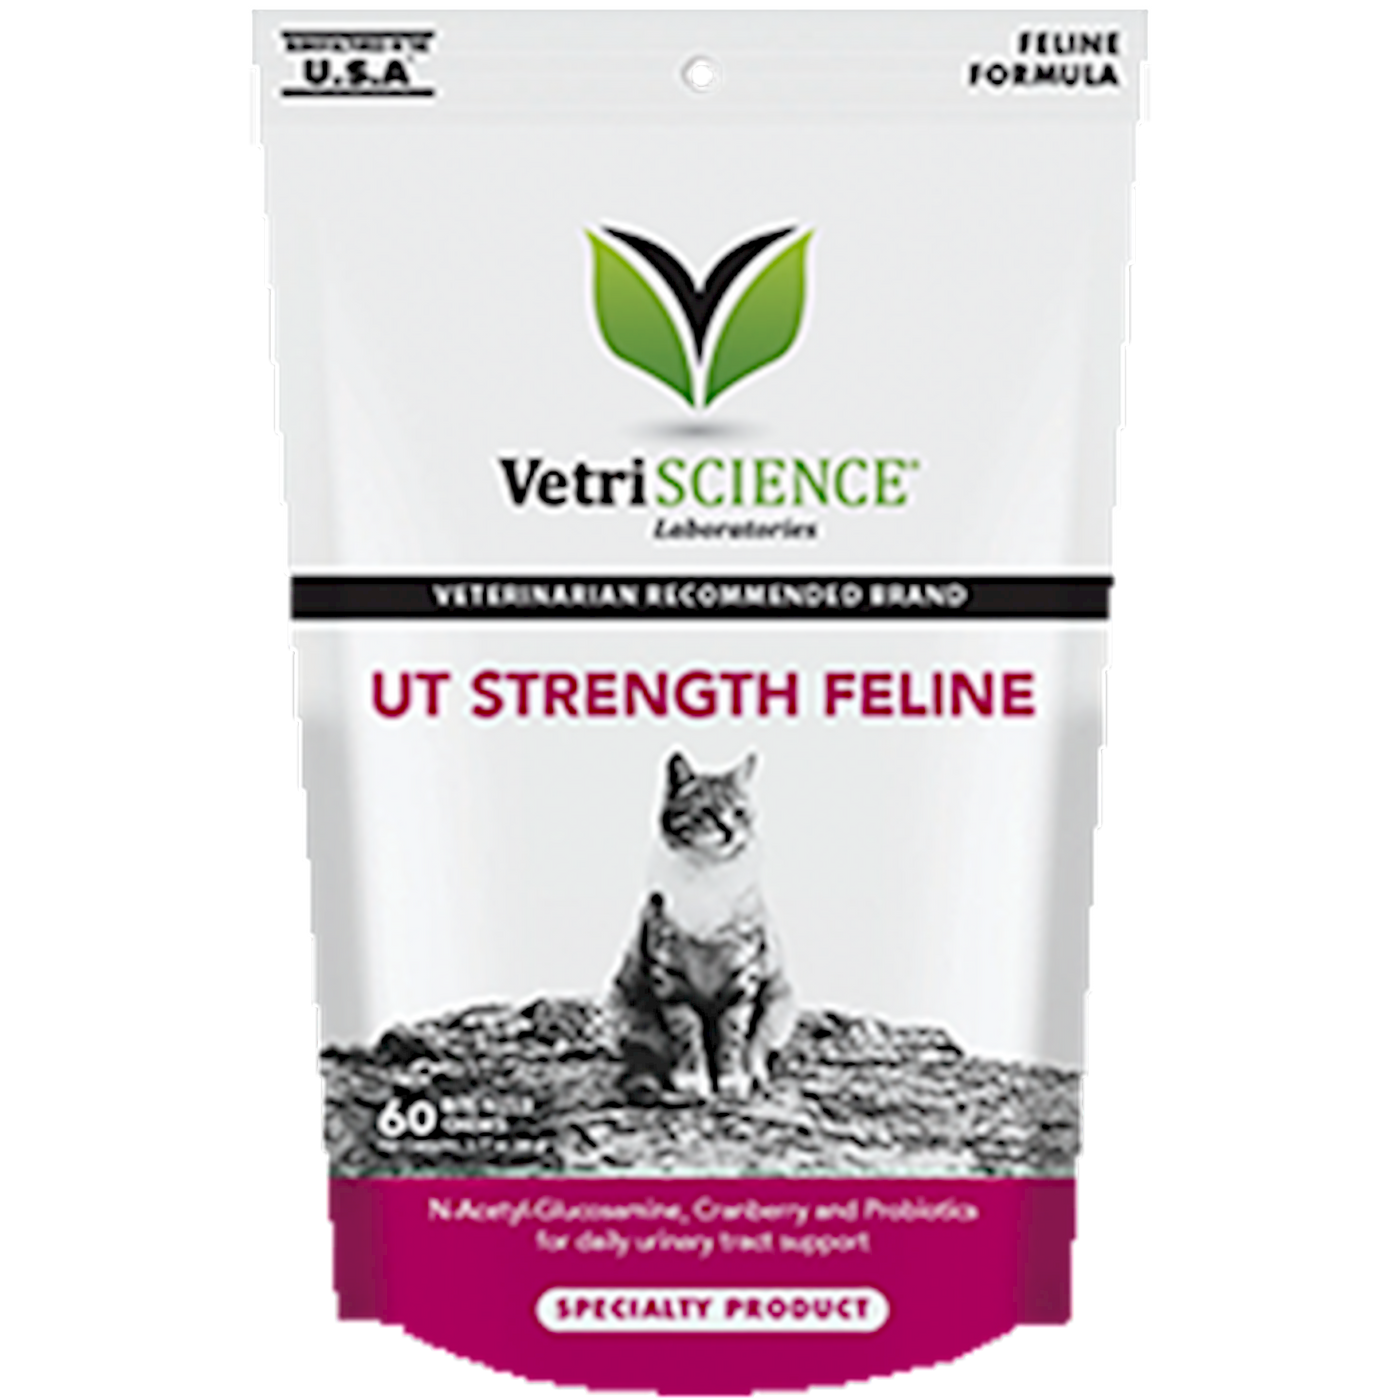 UT Strength Feline Chews 60 chews Curated Wellness